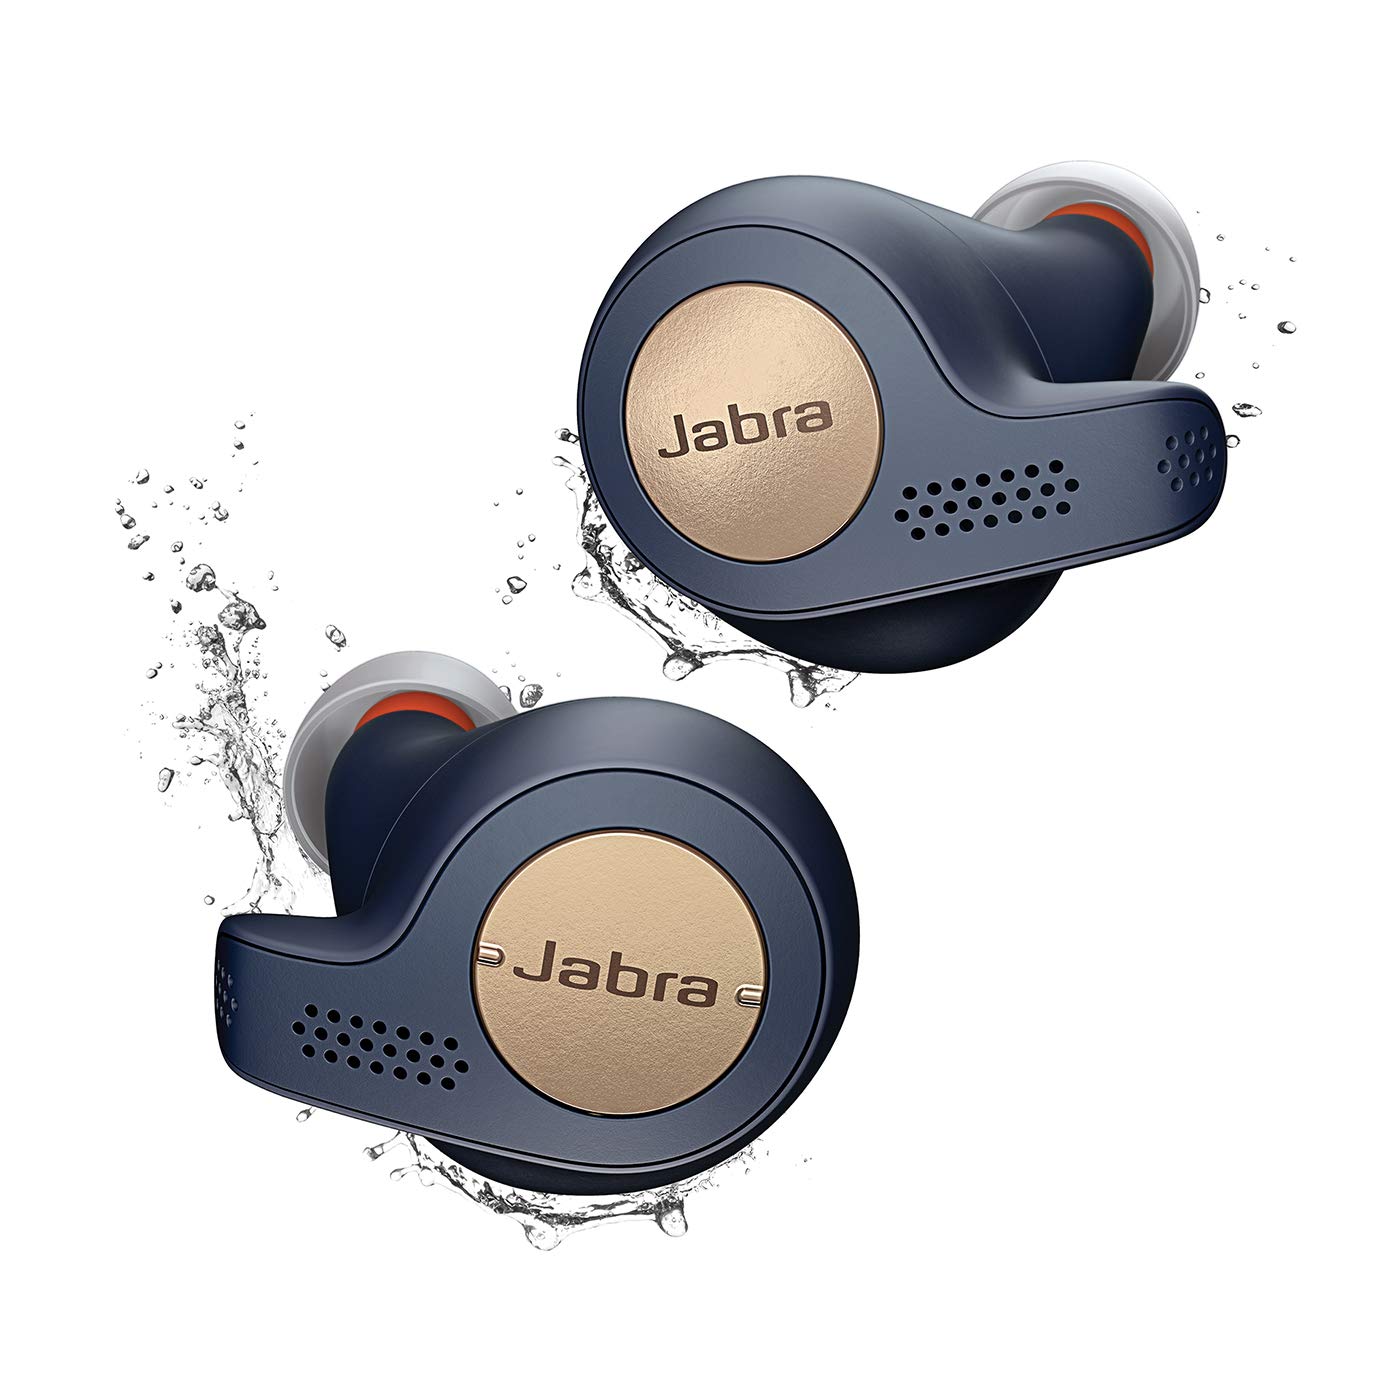 Jabra Elite 65t headphones with a smartphone or computer